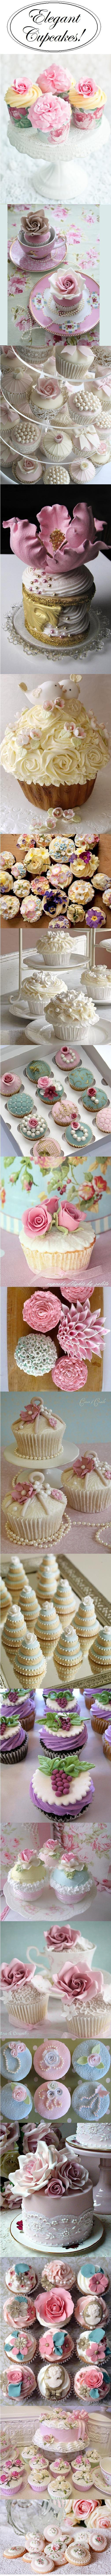 Свадьба - Cupcakes!!  Everything Cupcake!  ....Share Your  Favorite Cupcake Bakery, Cupcake Blog, Cupcake Images... Everything Cupcake!